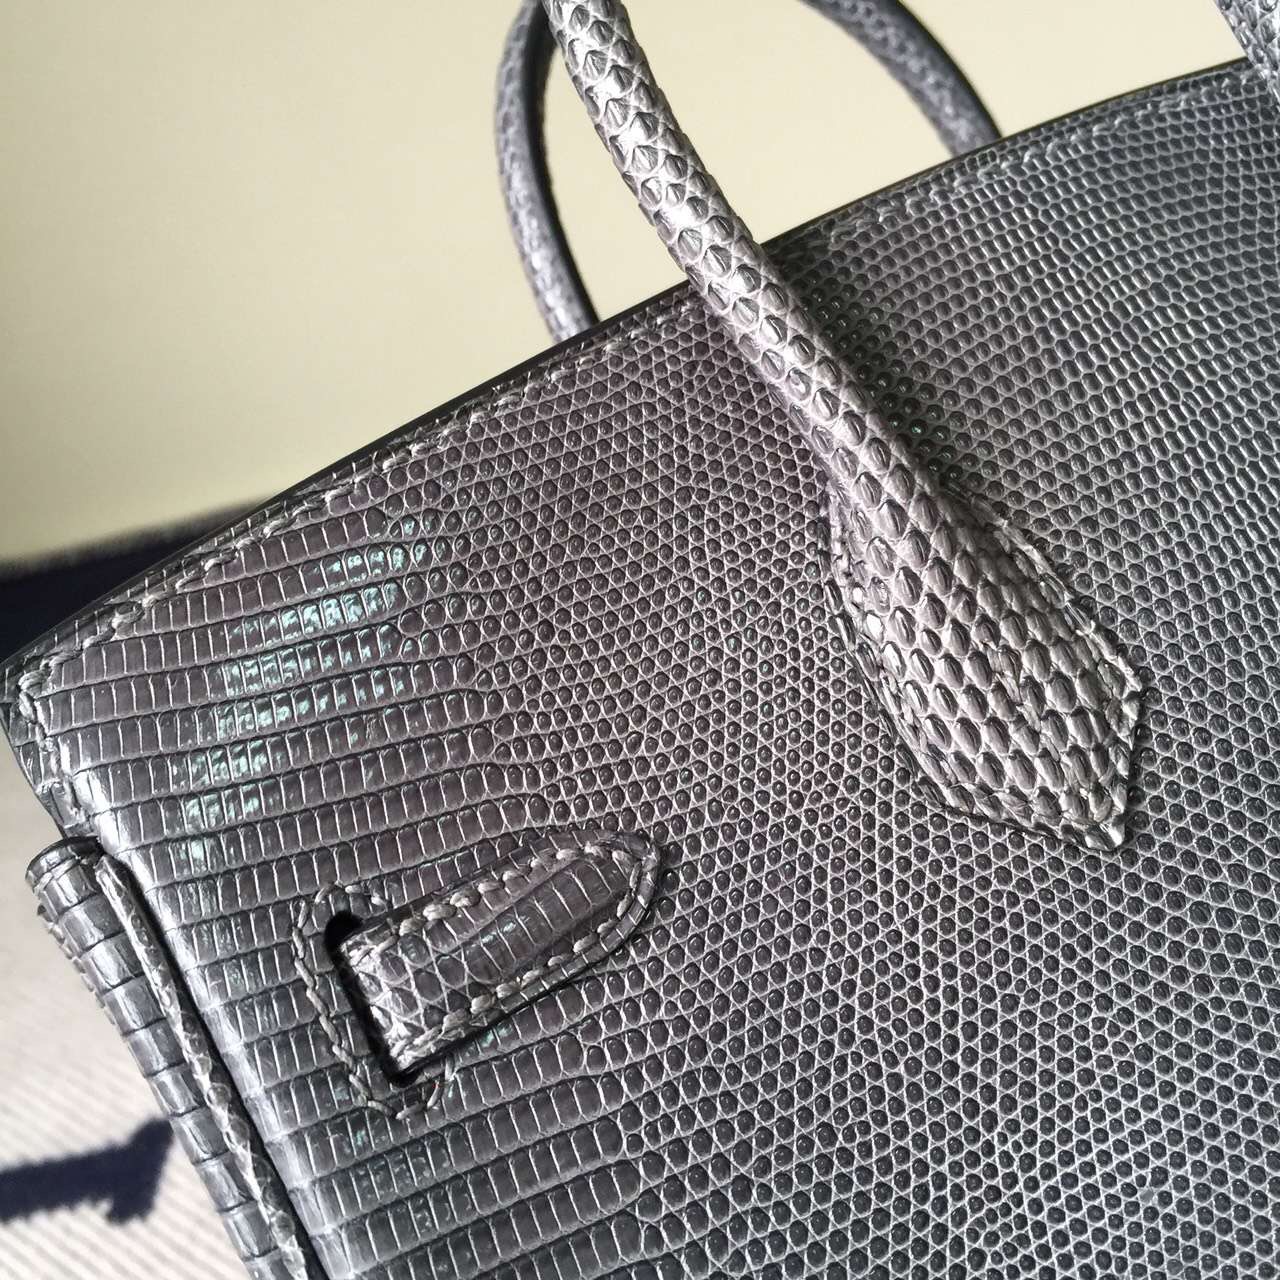 Hand Stitching Hermes Lizard Leather Birkin25cm Bag in Galaxy Grey